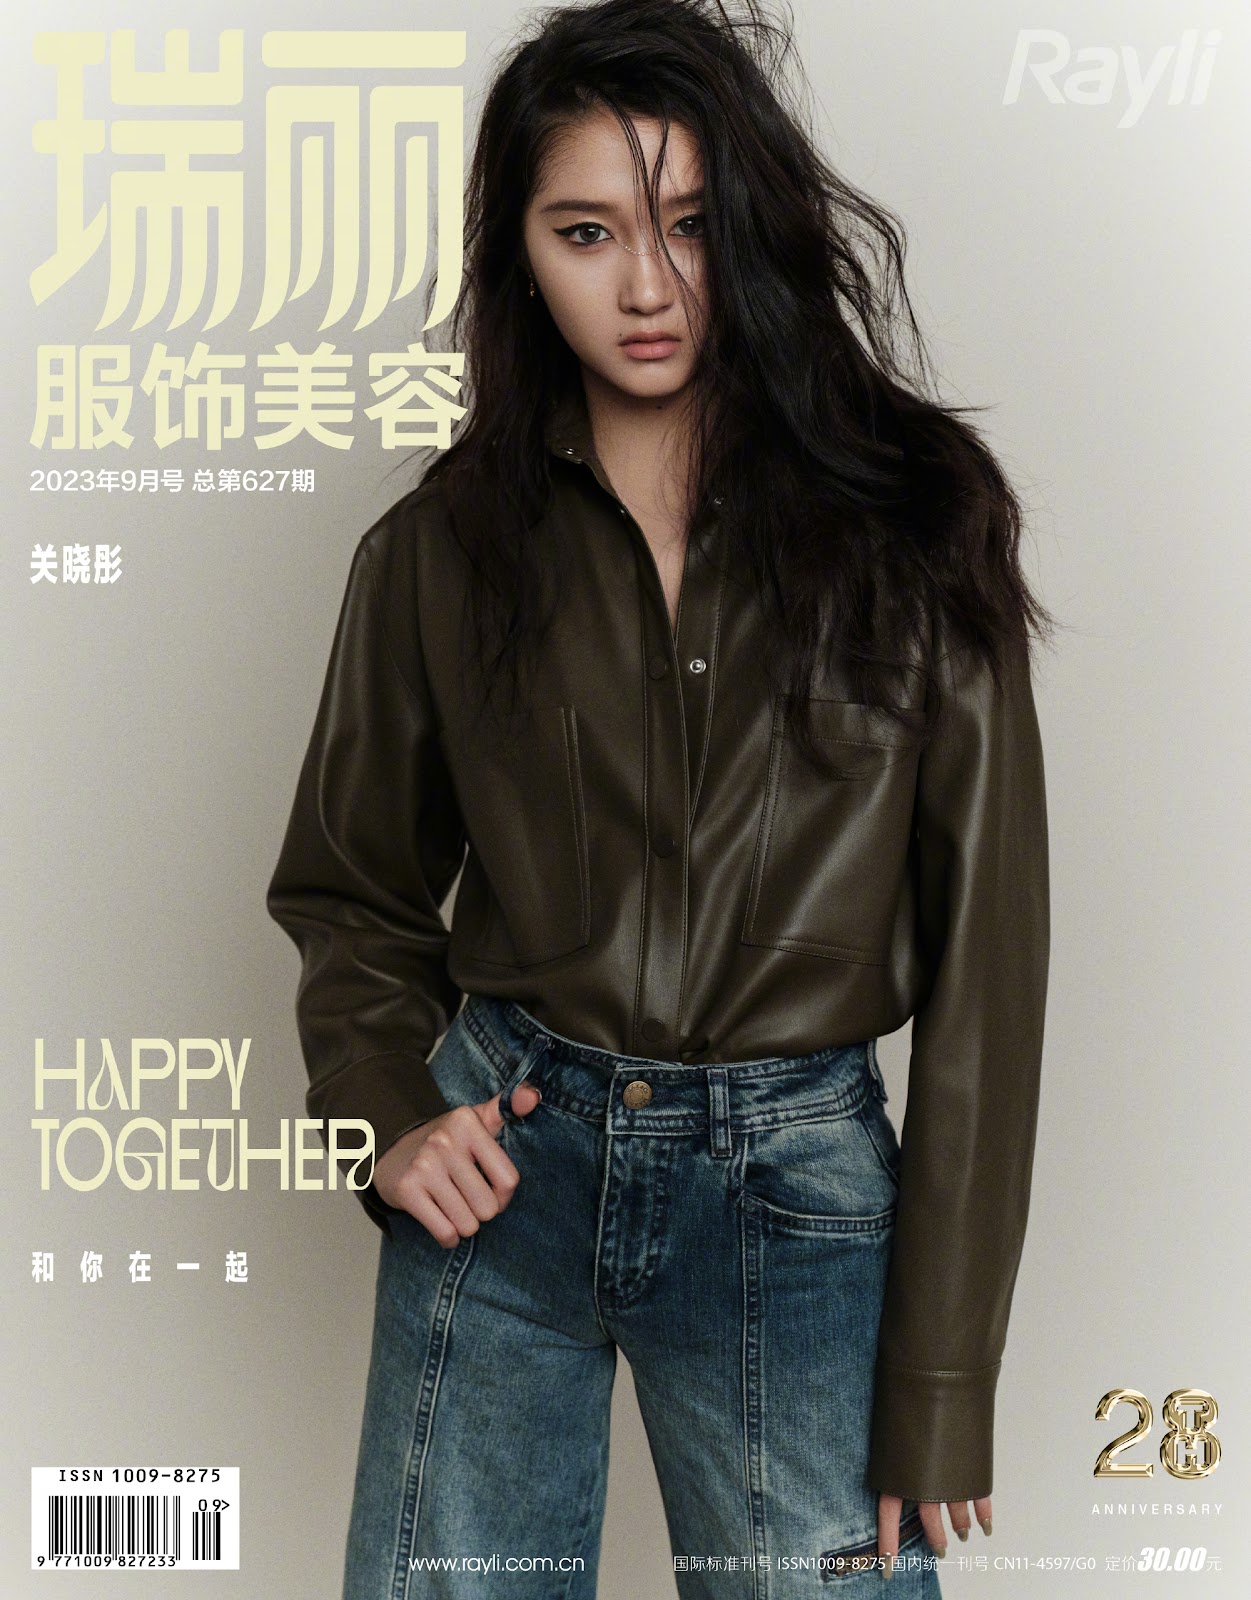 Chinese actress Zhou Dongyu covers 'Cosmopolitan' magazine